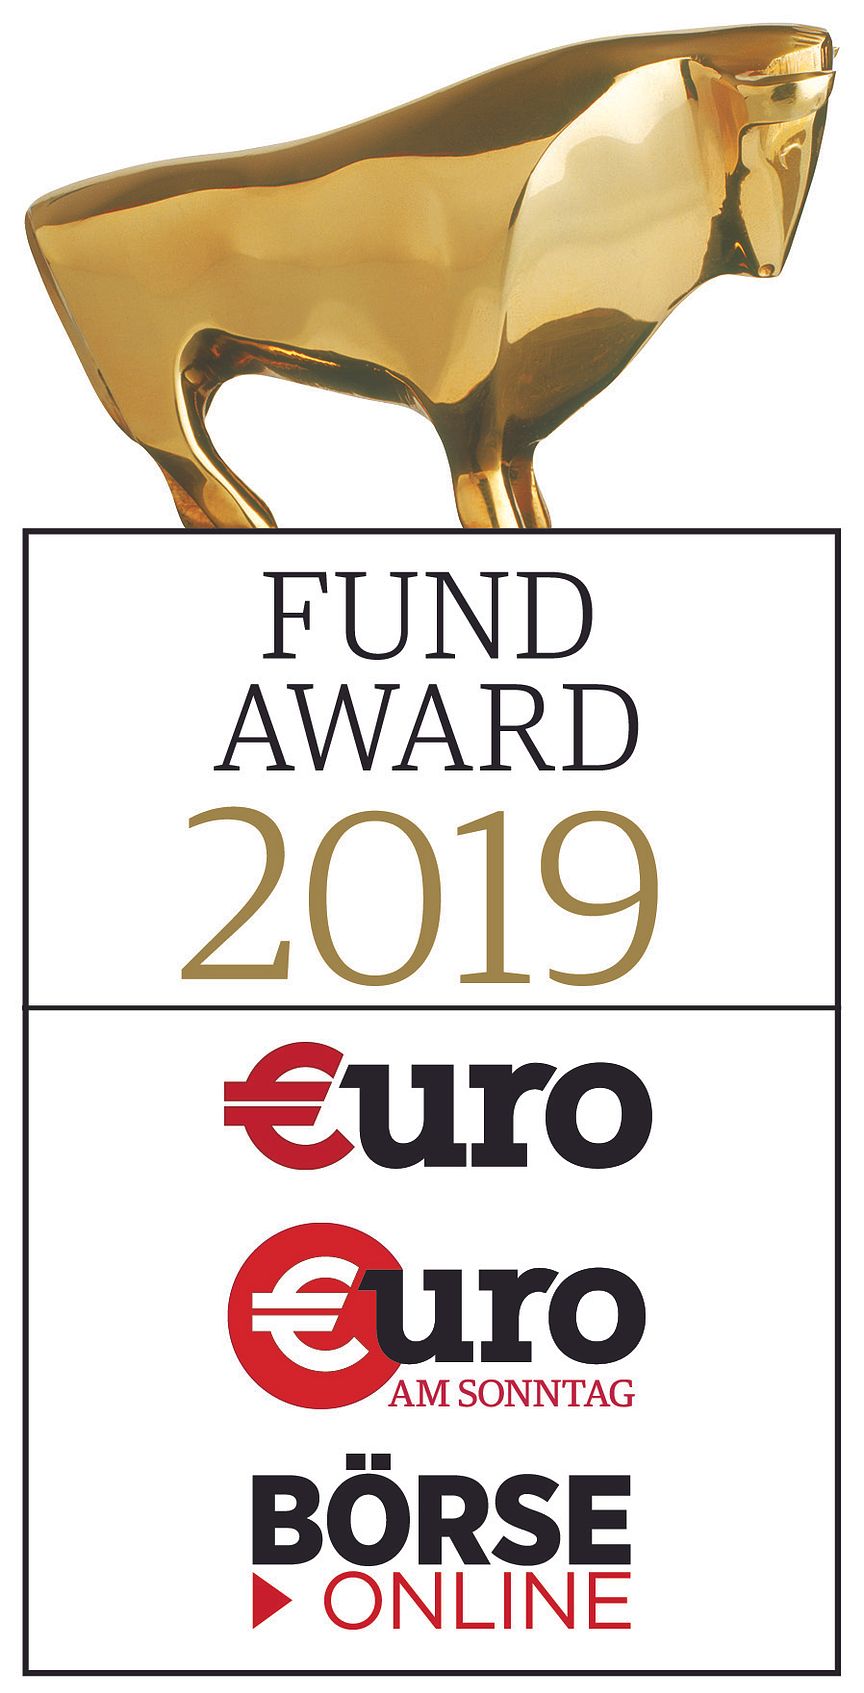 €uro Fund Award 2019